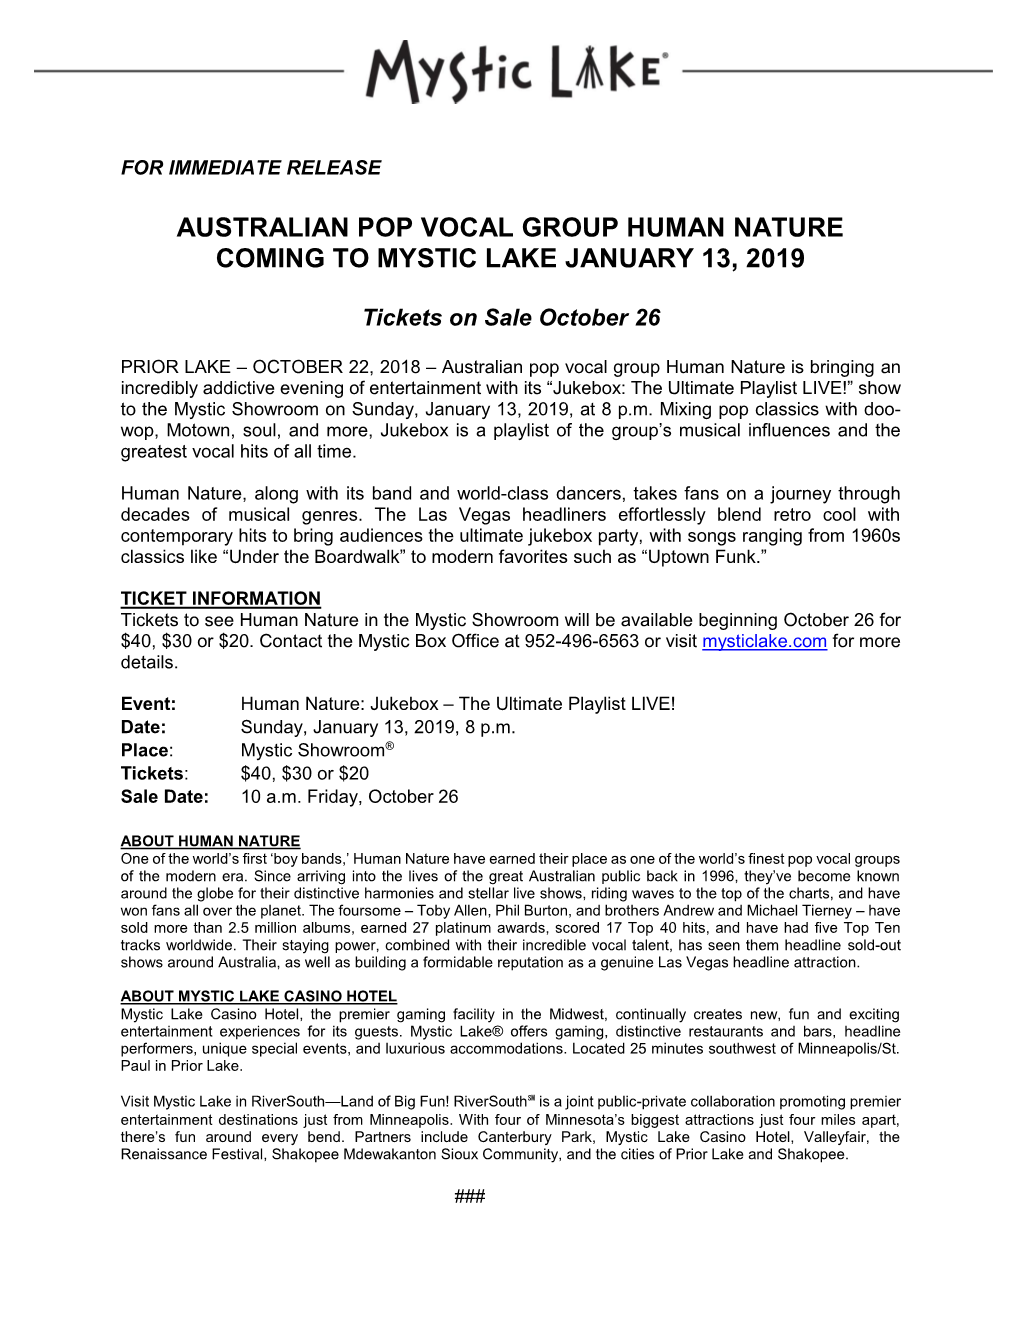 Australian Pop Vocal Group Human Nature Coming to Mystic Lake January 13, 2019